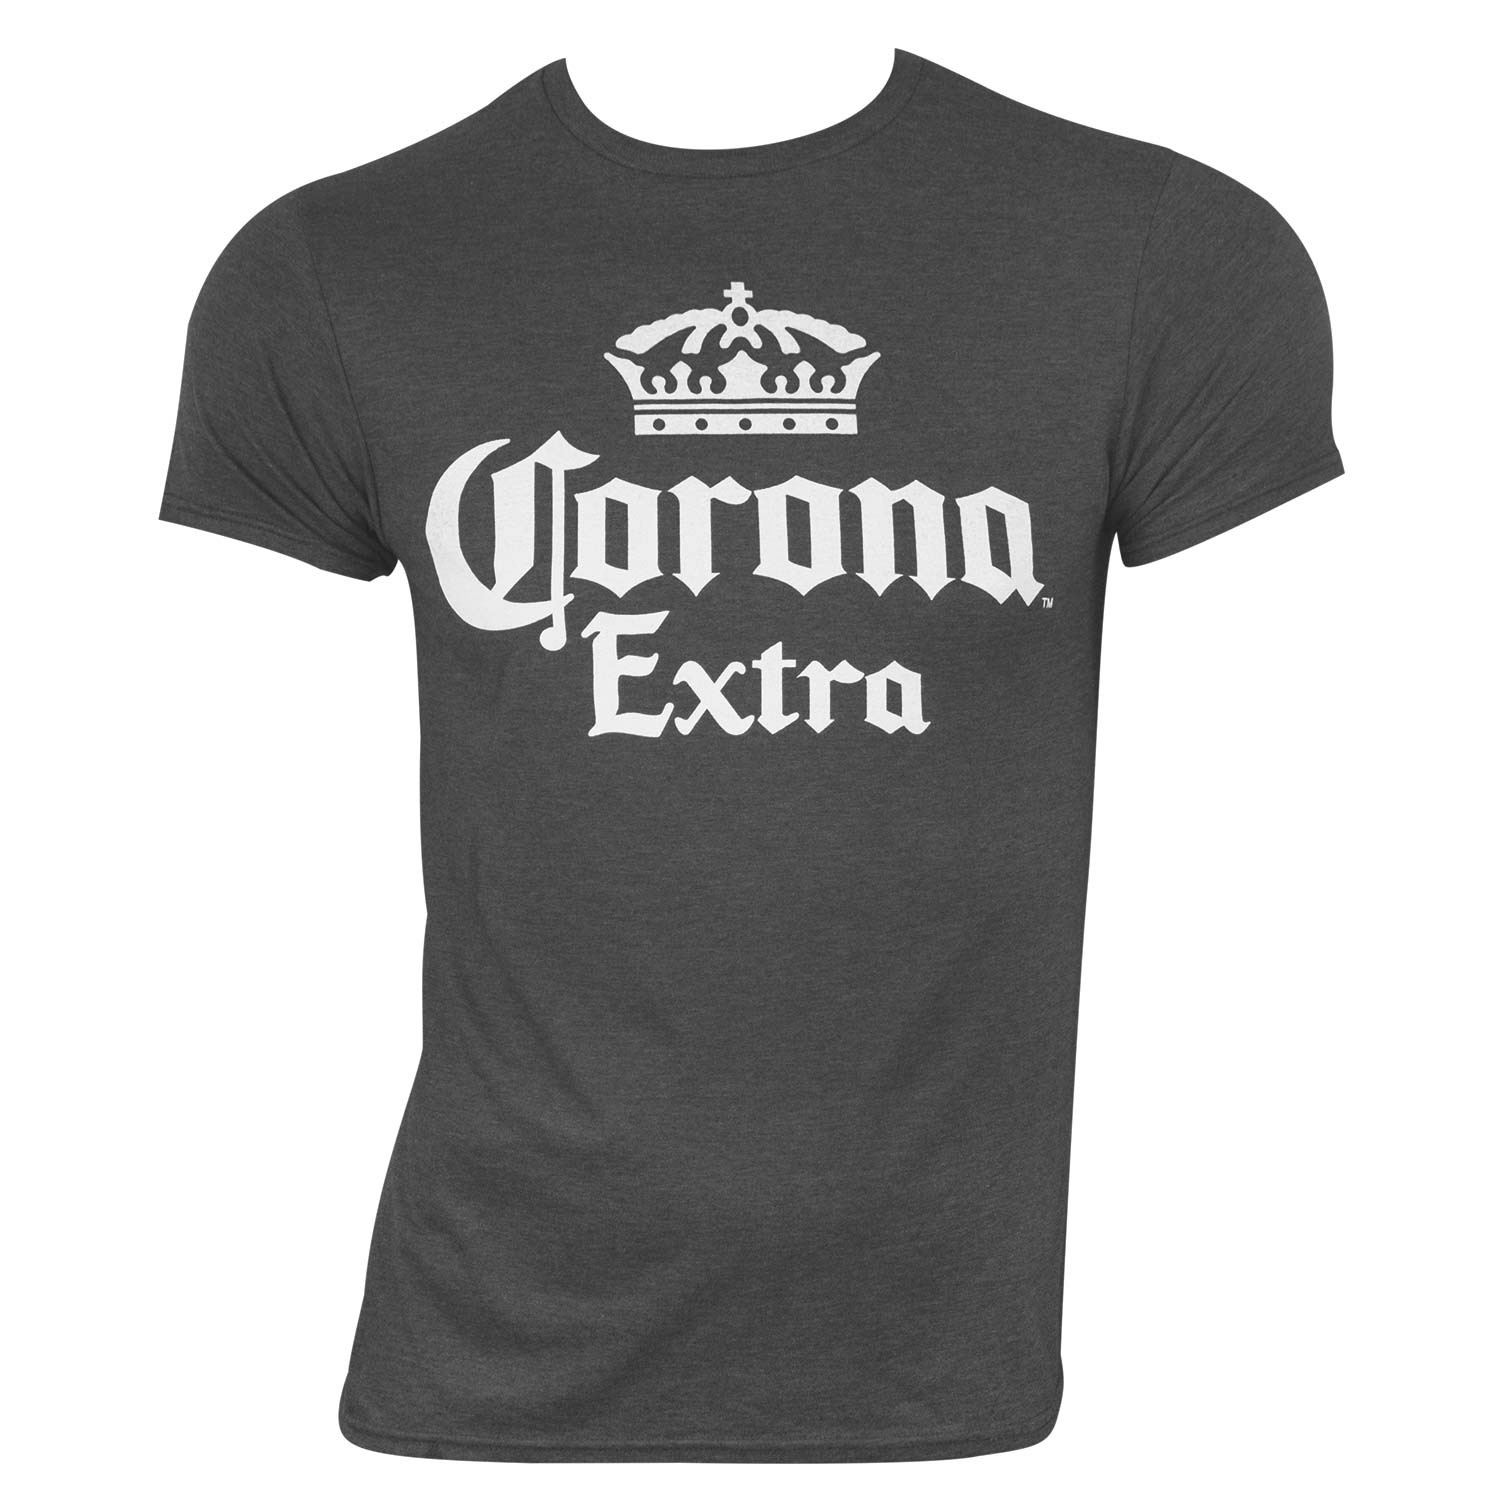 Corona Extra Classic Label Grey Tee Shirt